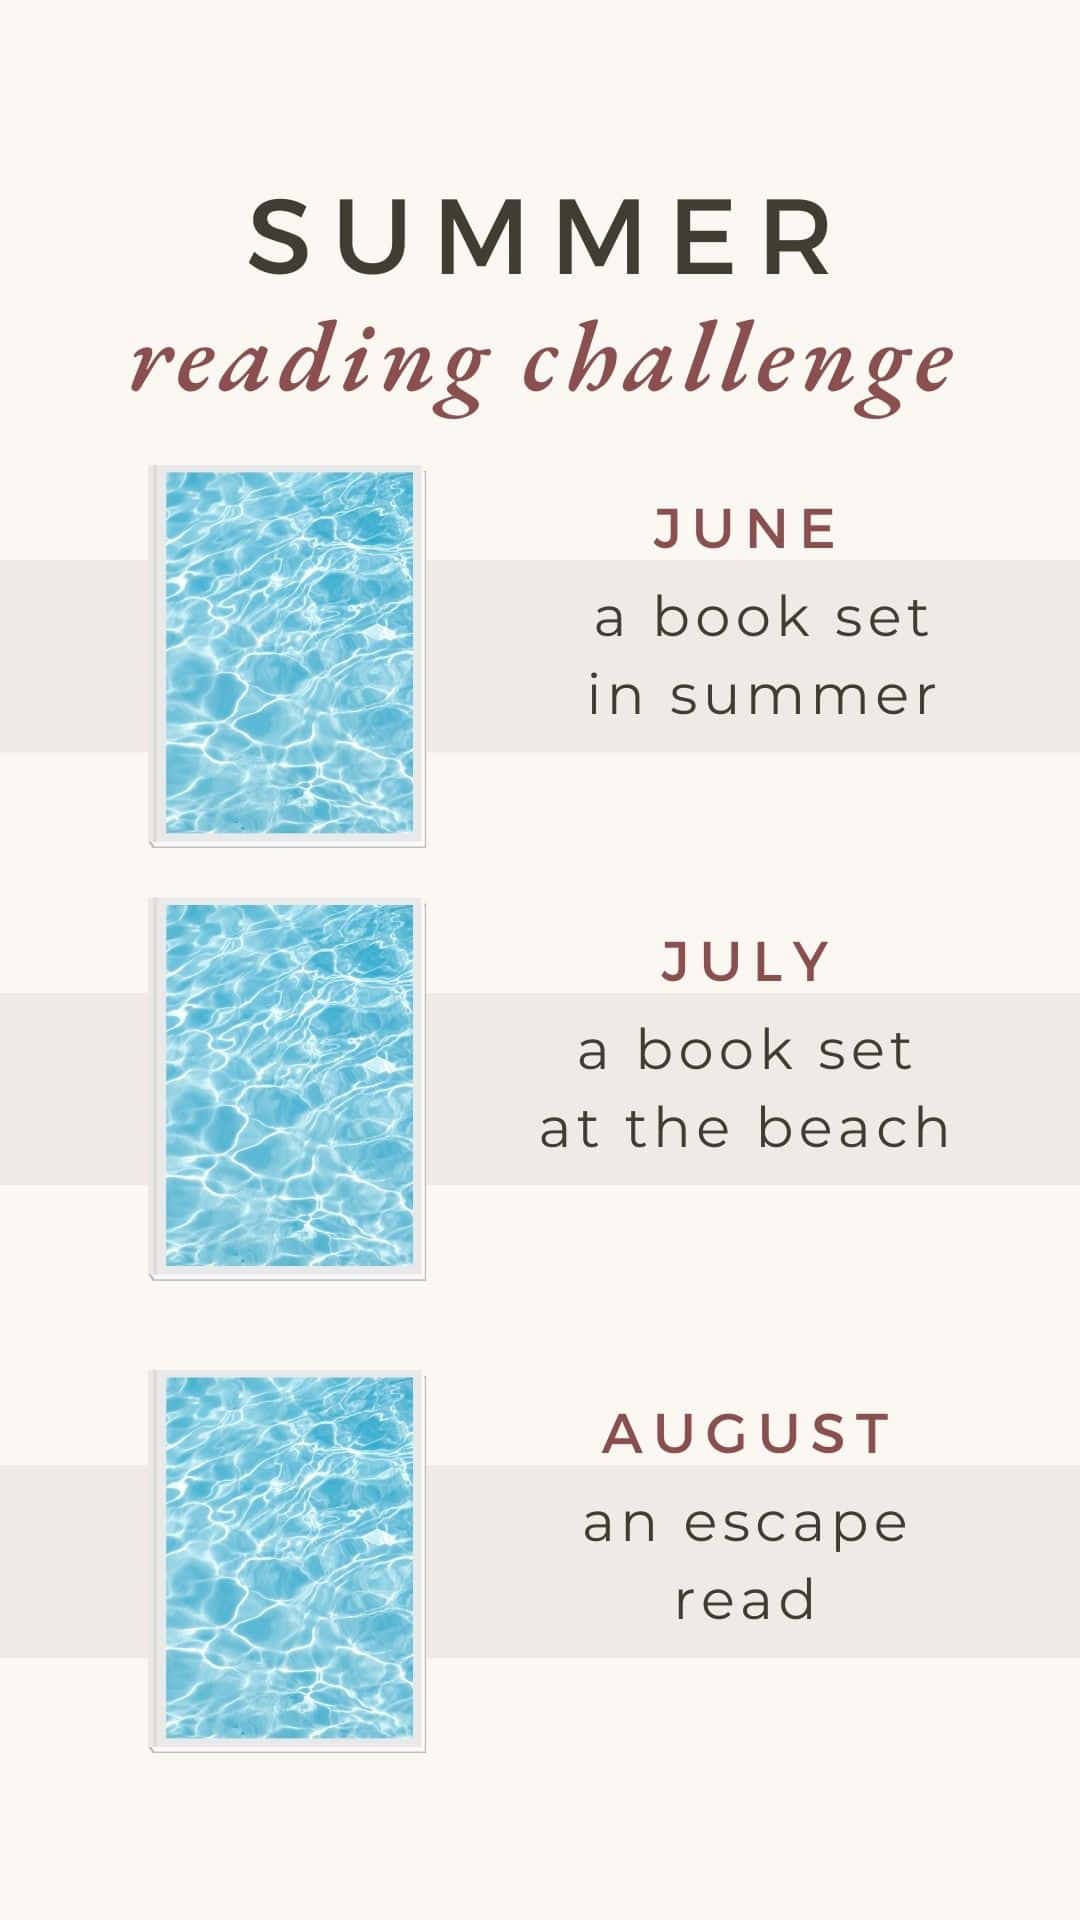 summer reading challenge bookstagram story template.